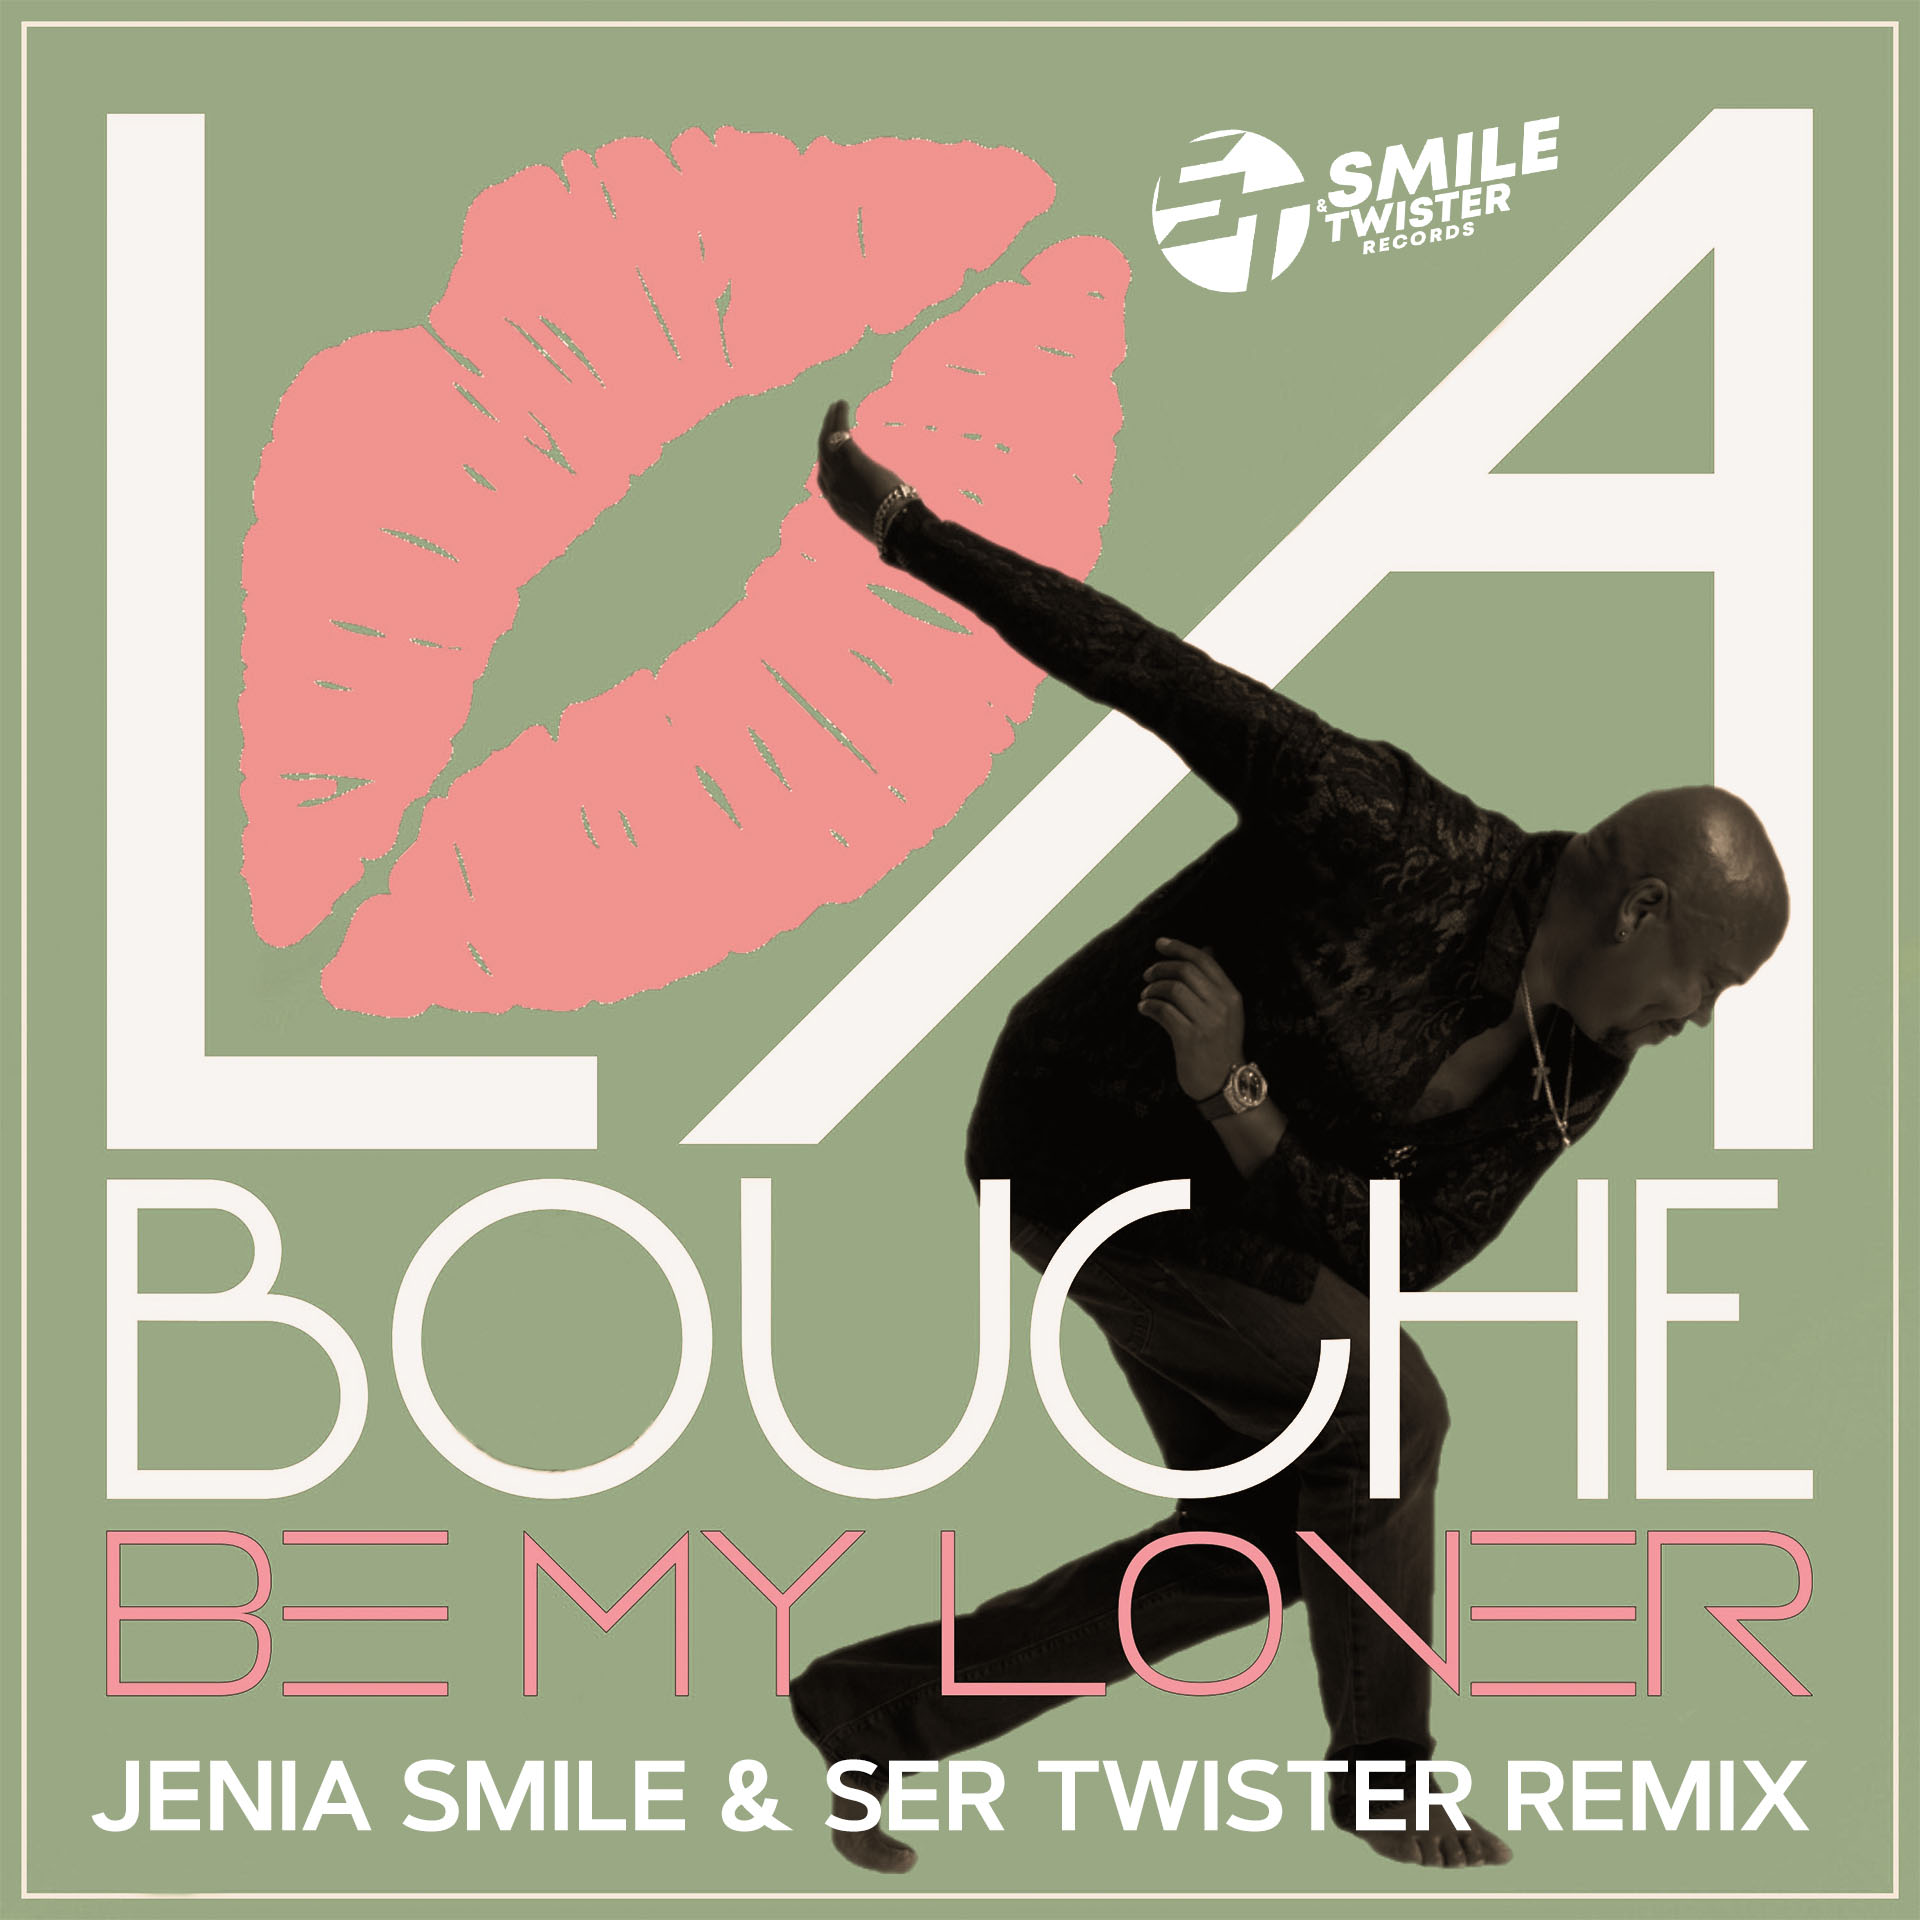 La Bouche - Be My Lover (Jenia Smile & Ser Twister Remix)